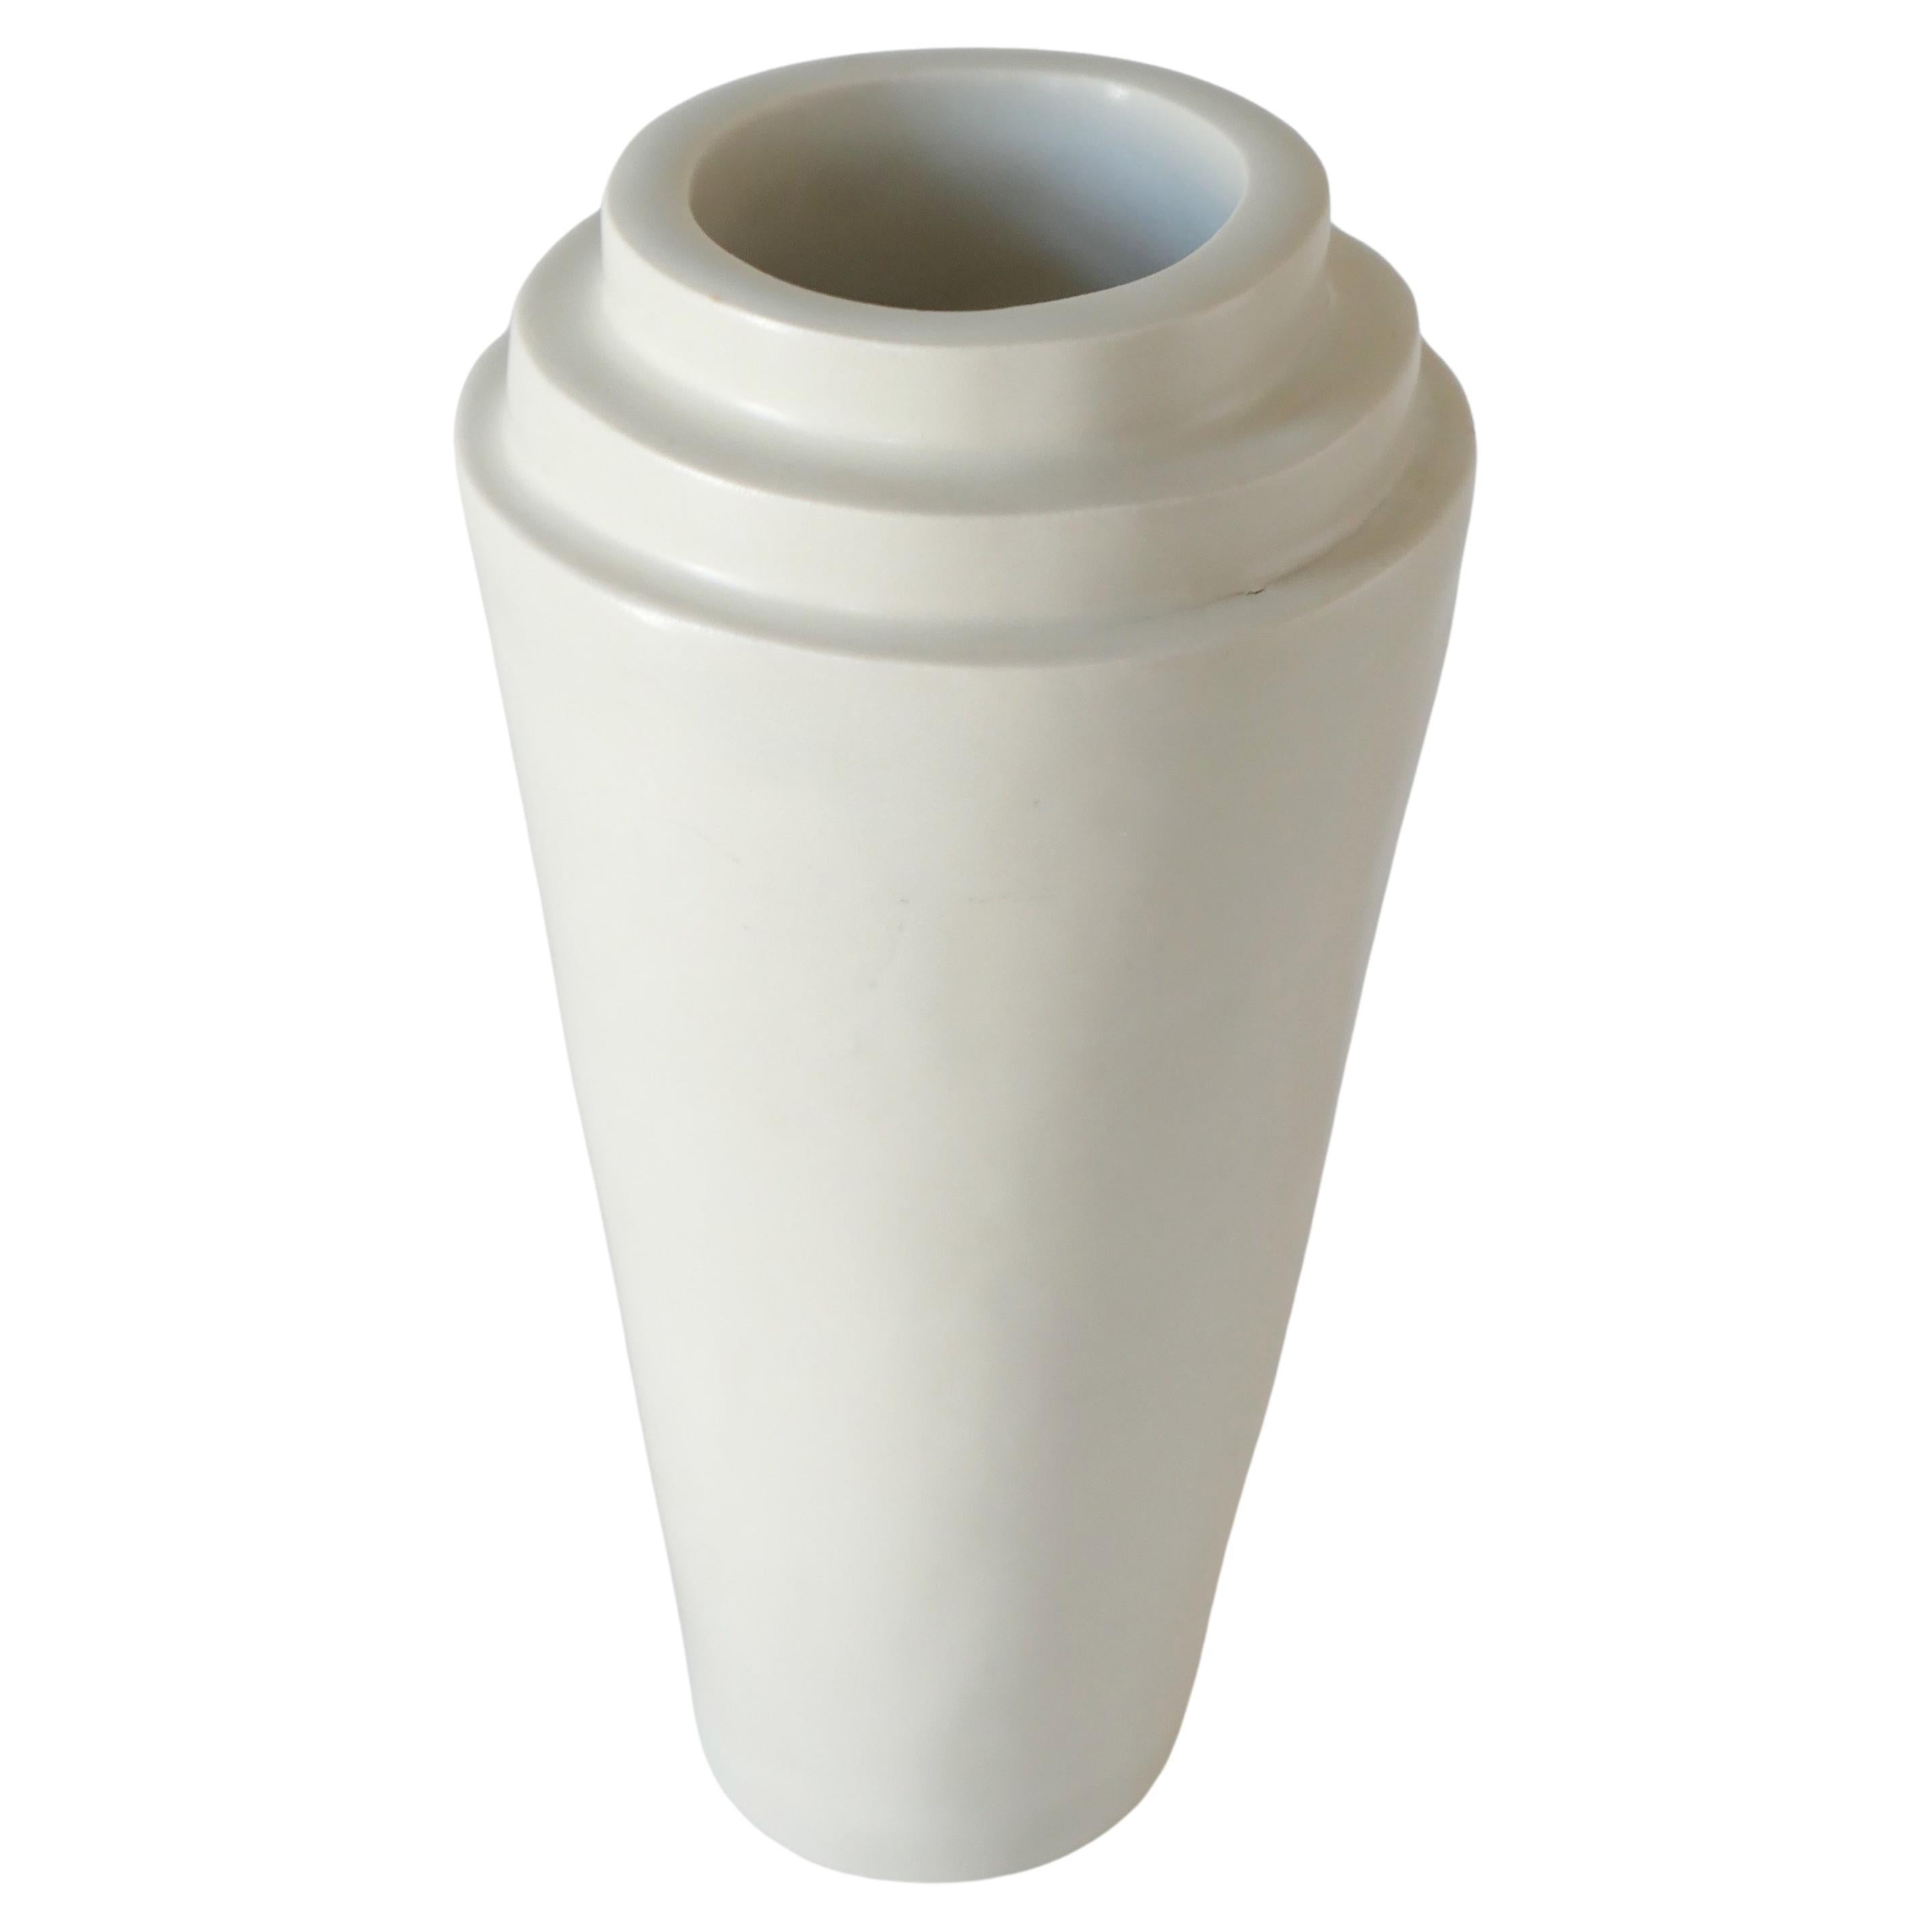 Contemporary Art Deco-Inspired Handmade Ceramic Vase